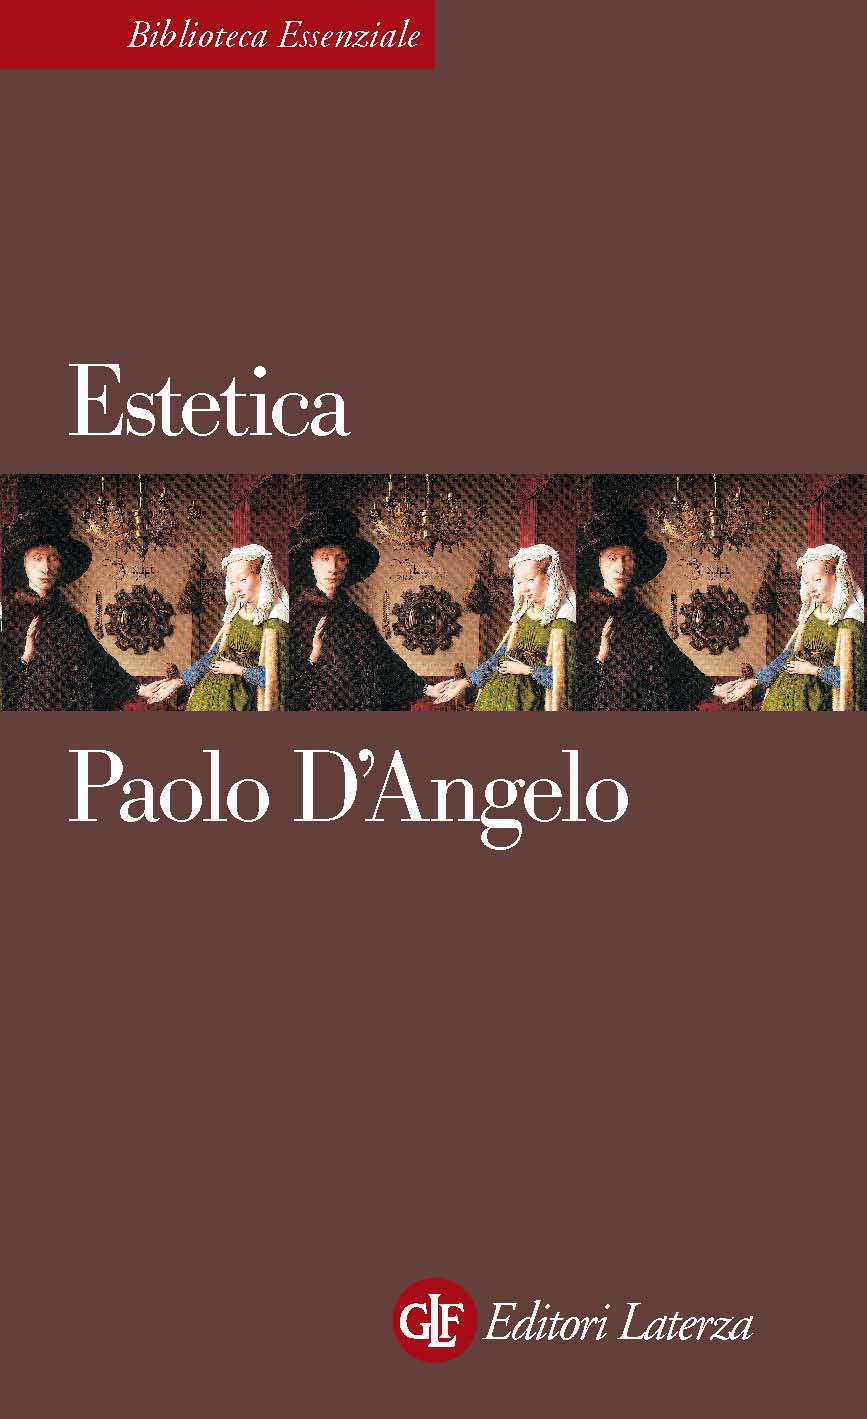 Paolo D’Angelo, Estetica (Laterza, 2011)